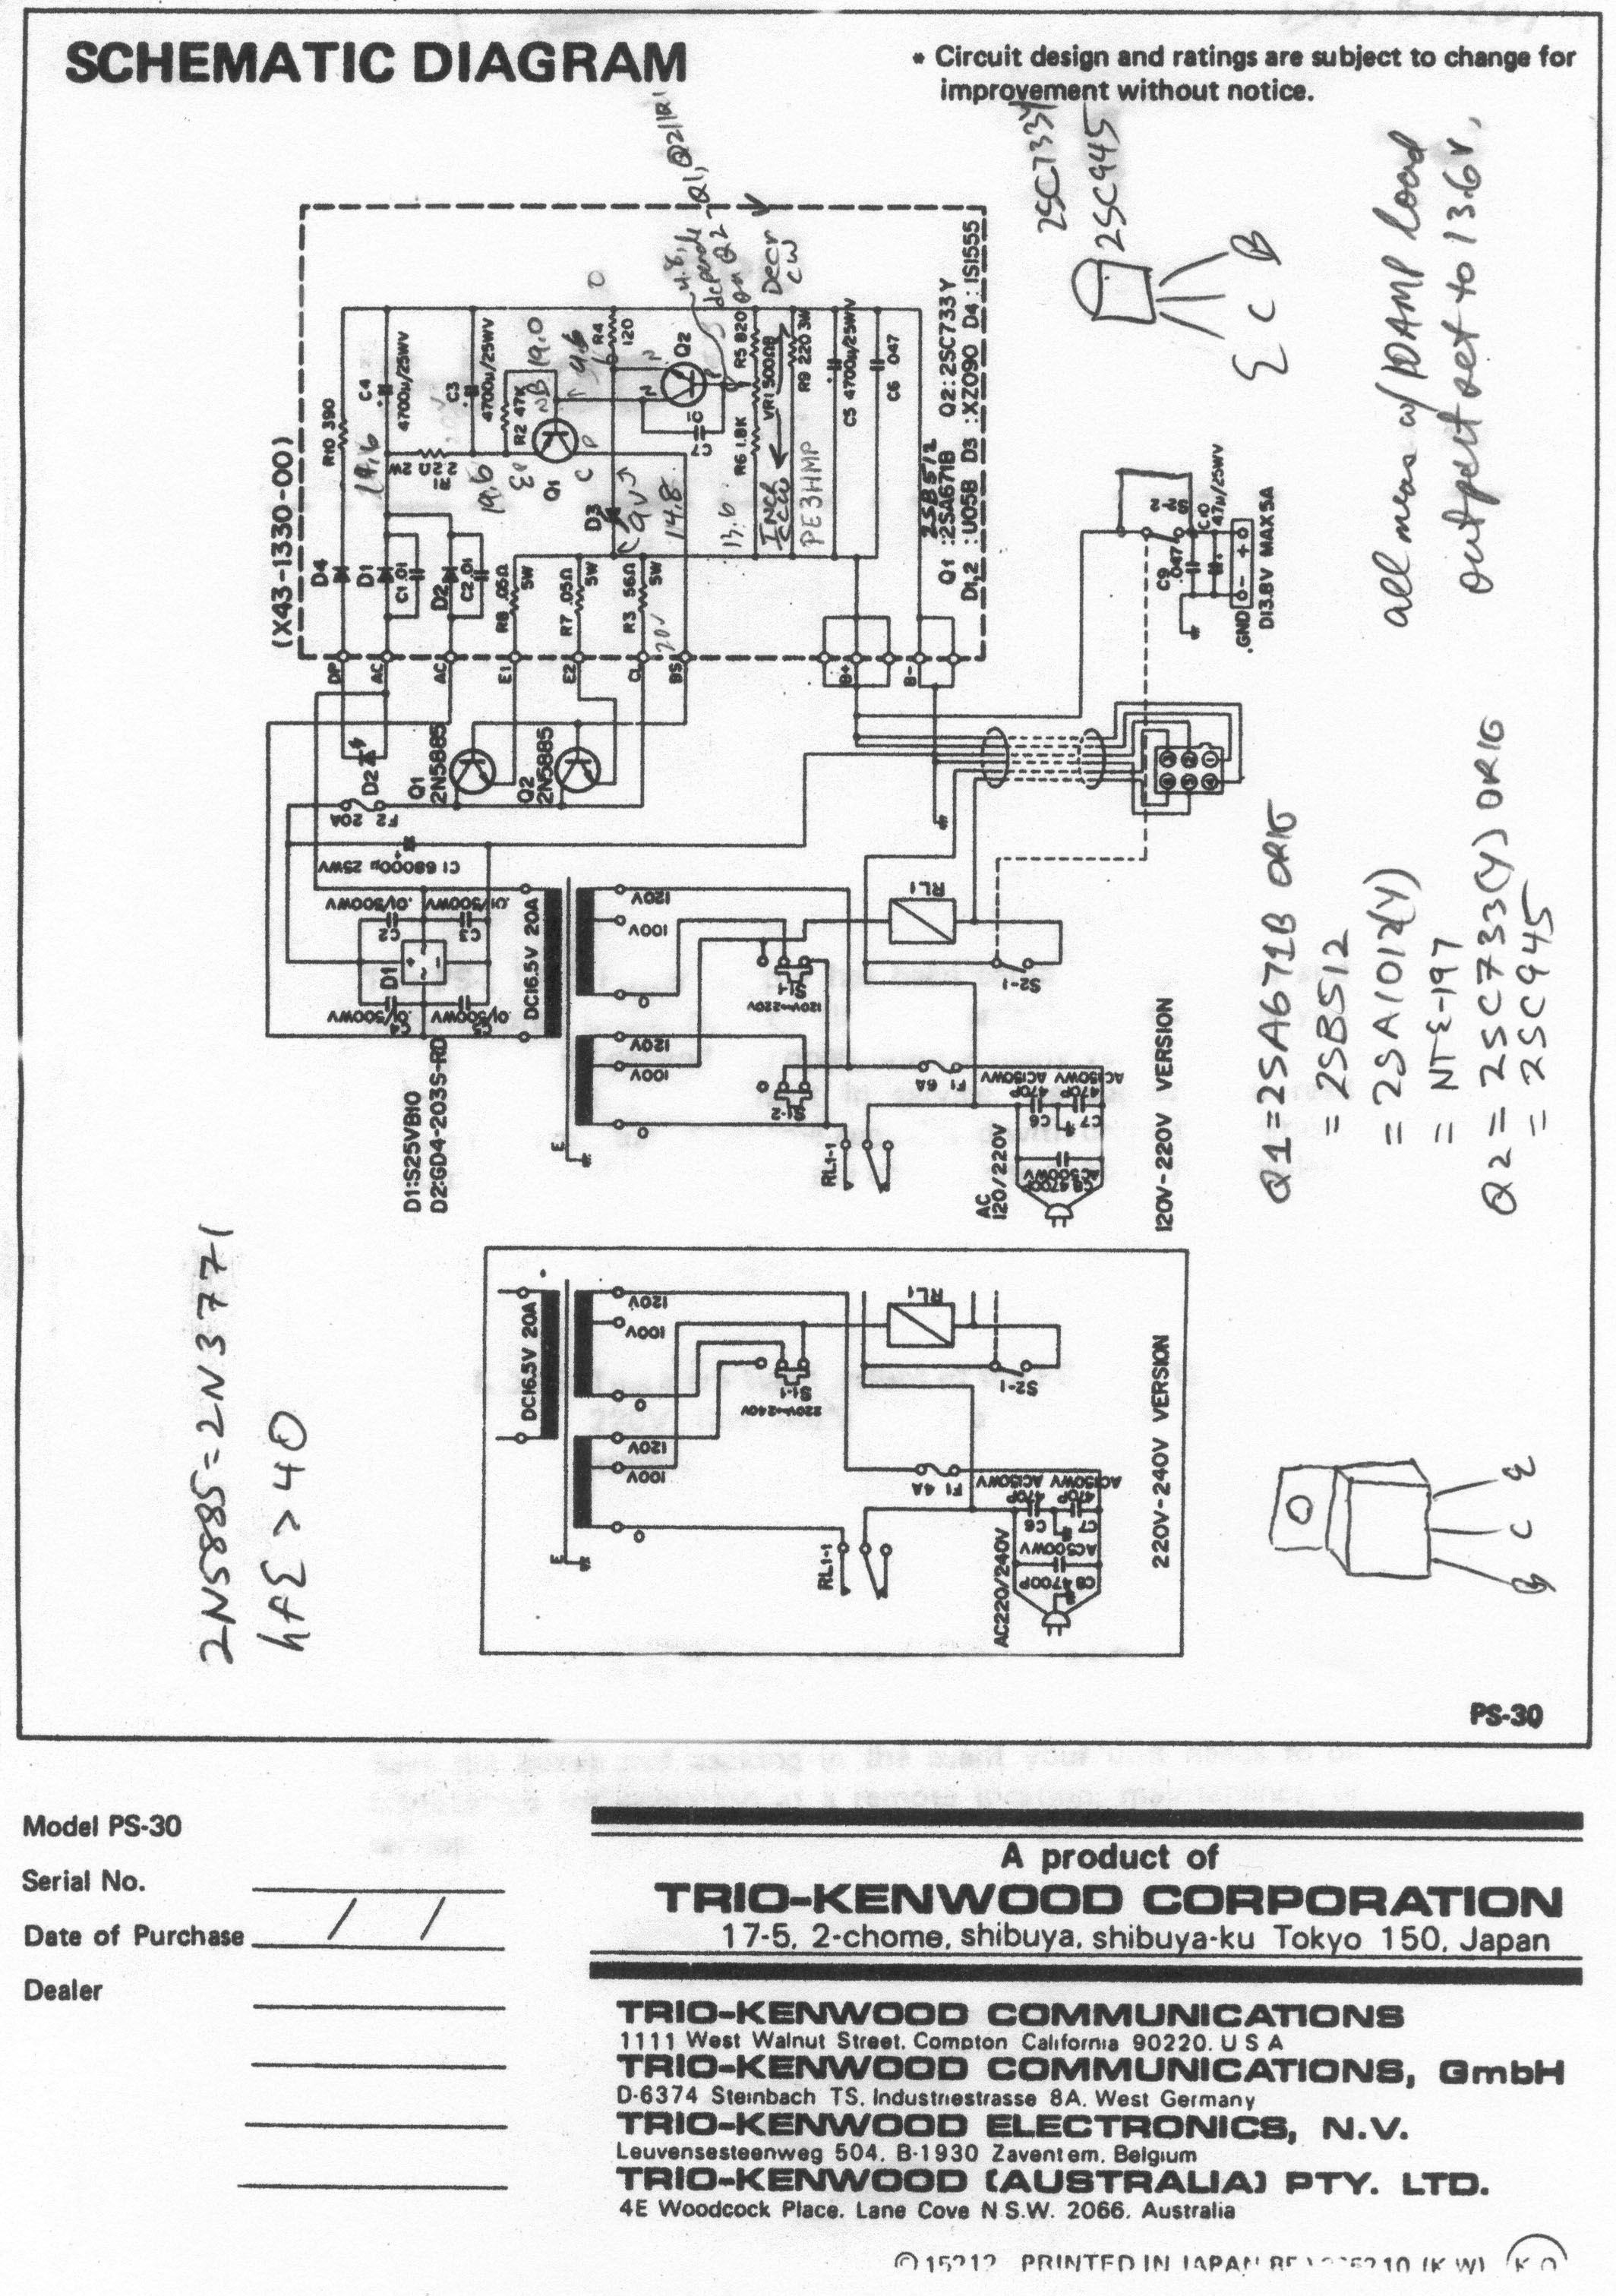 kmc thermostat bac-4001cw0003 wiring diagram